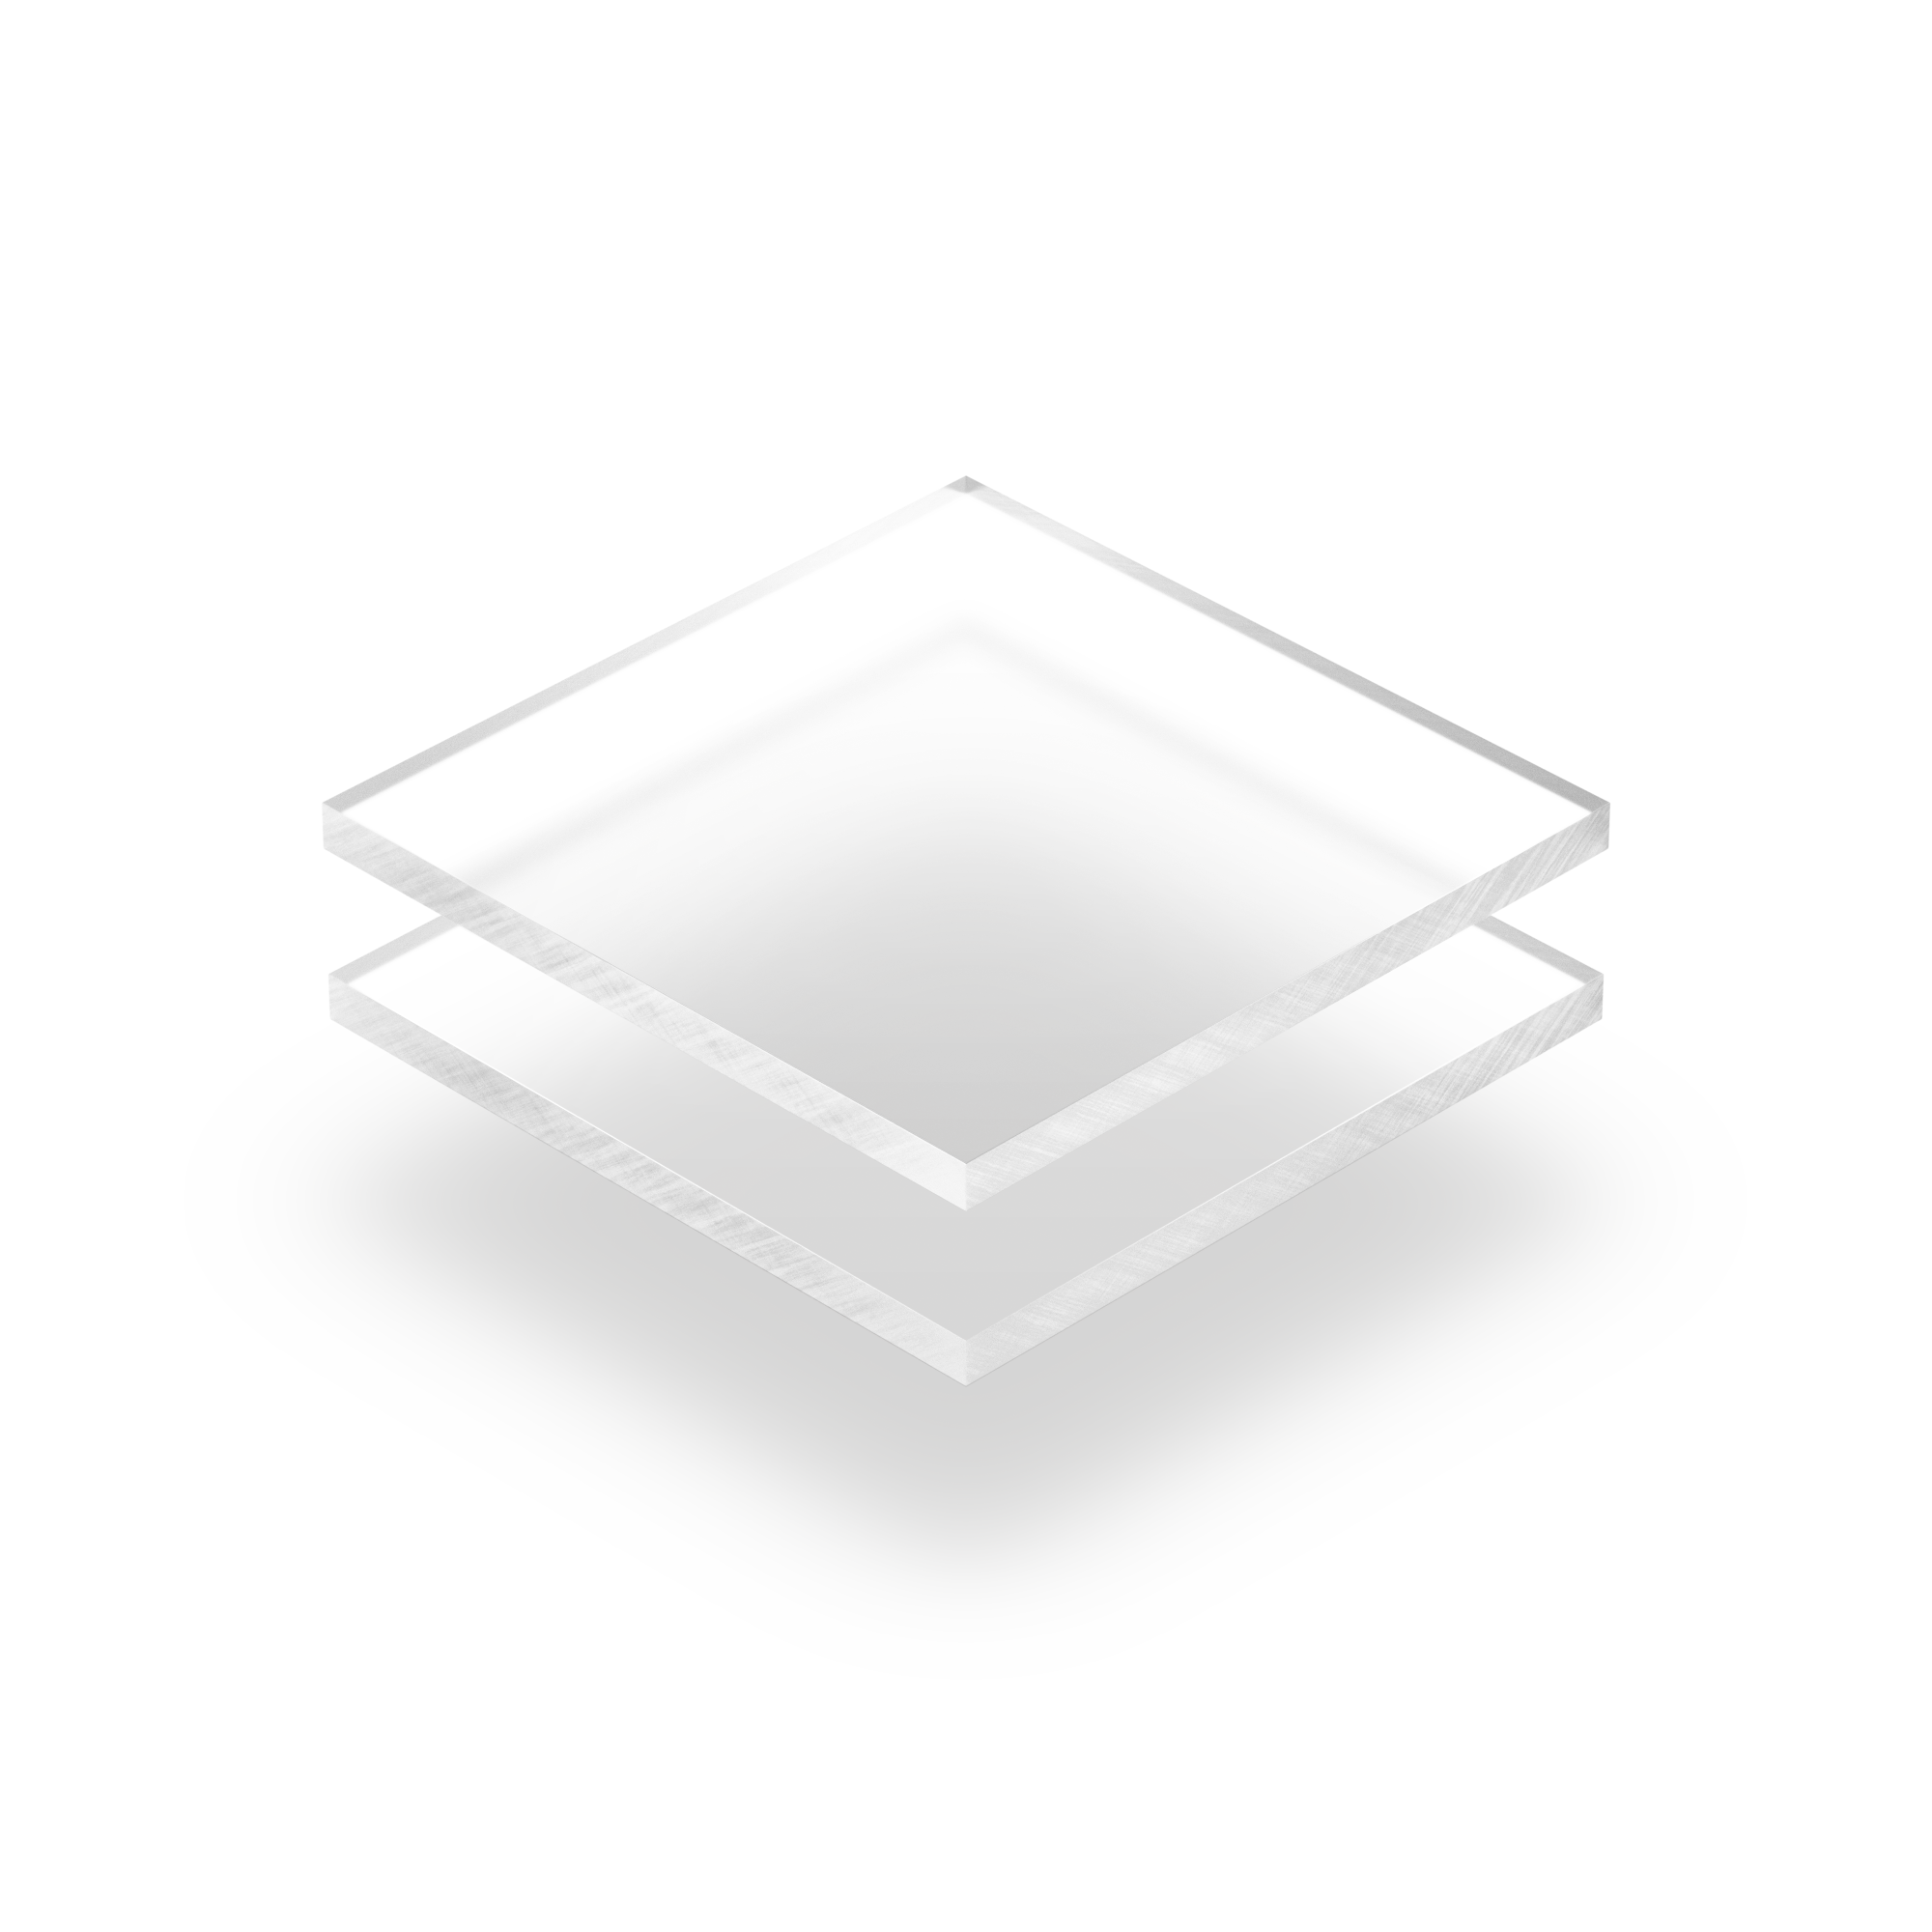 Plaque Plexigglas 1 mm. Feuille de verre acrylique. Plexigglas